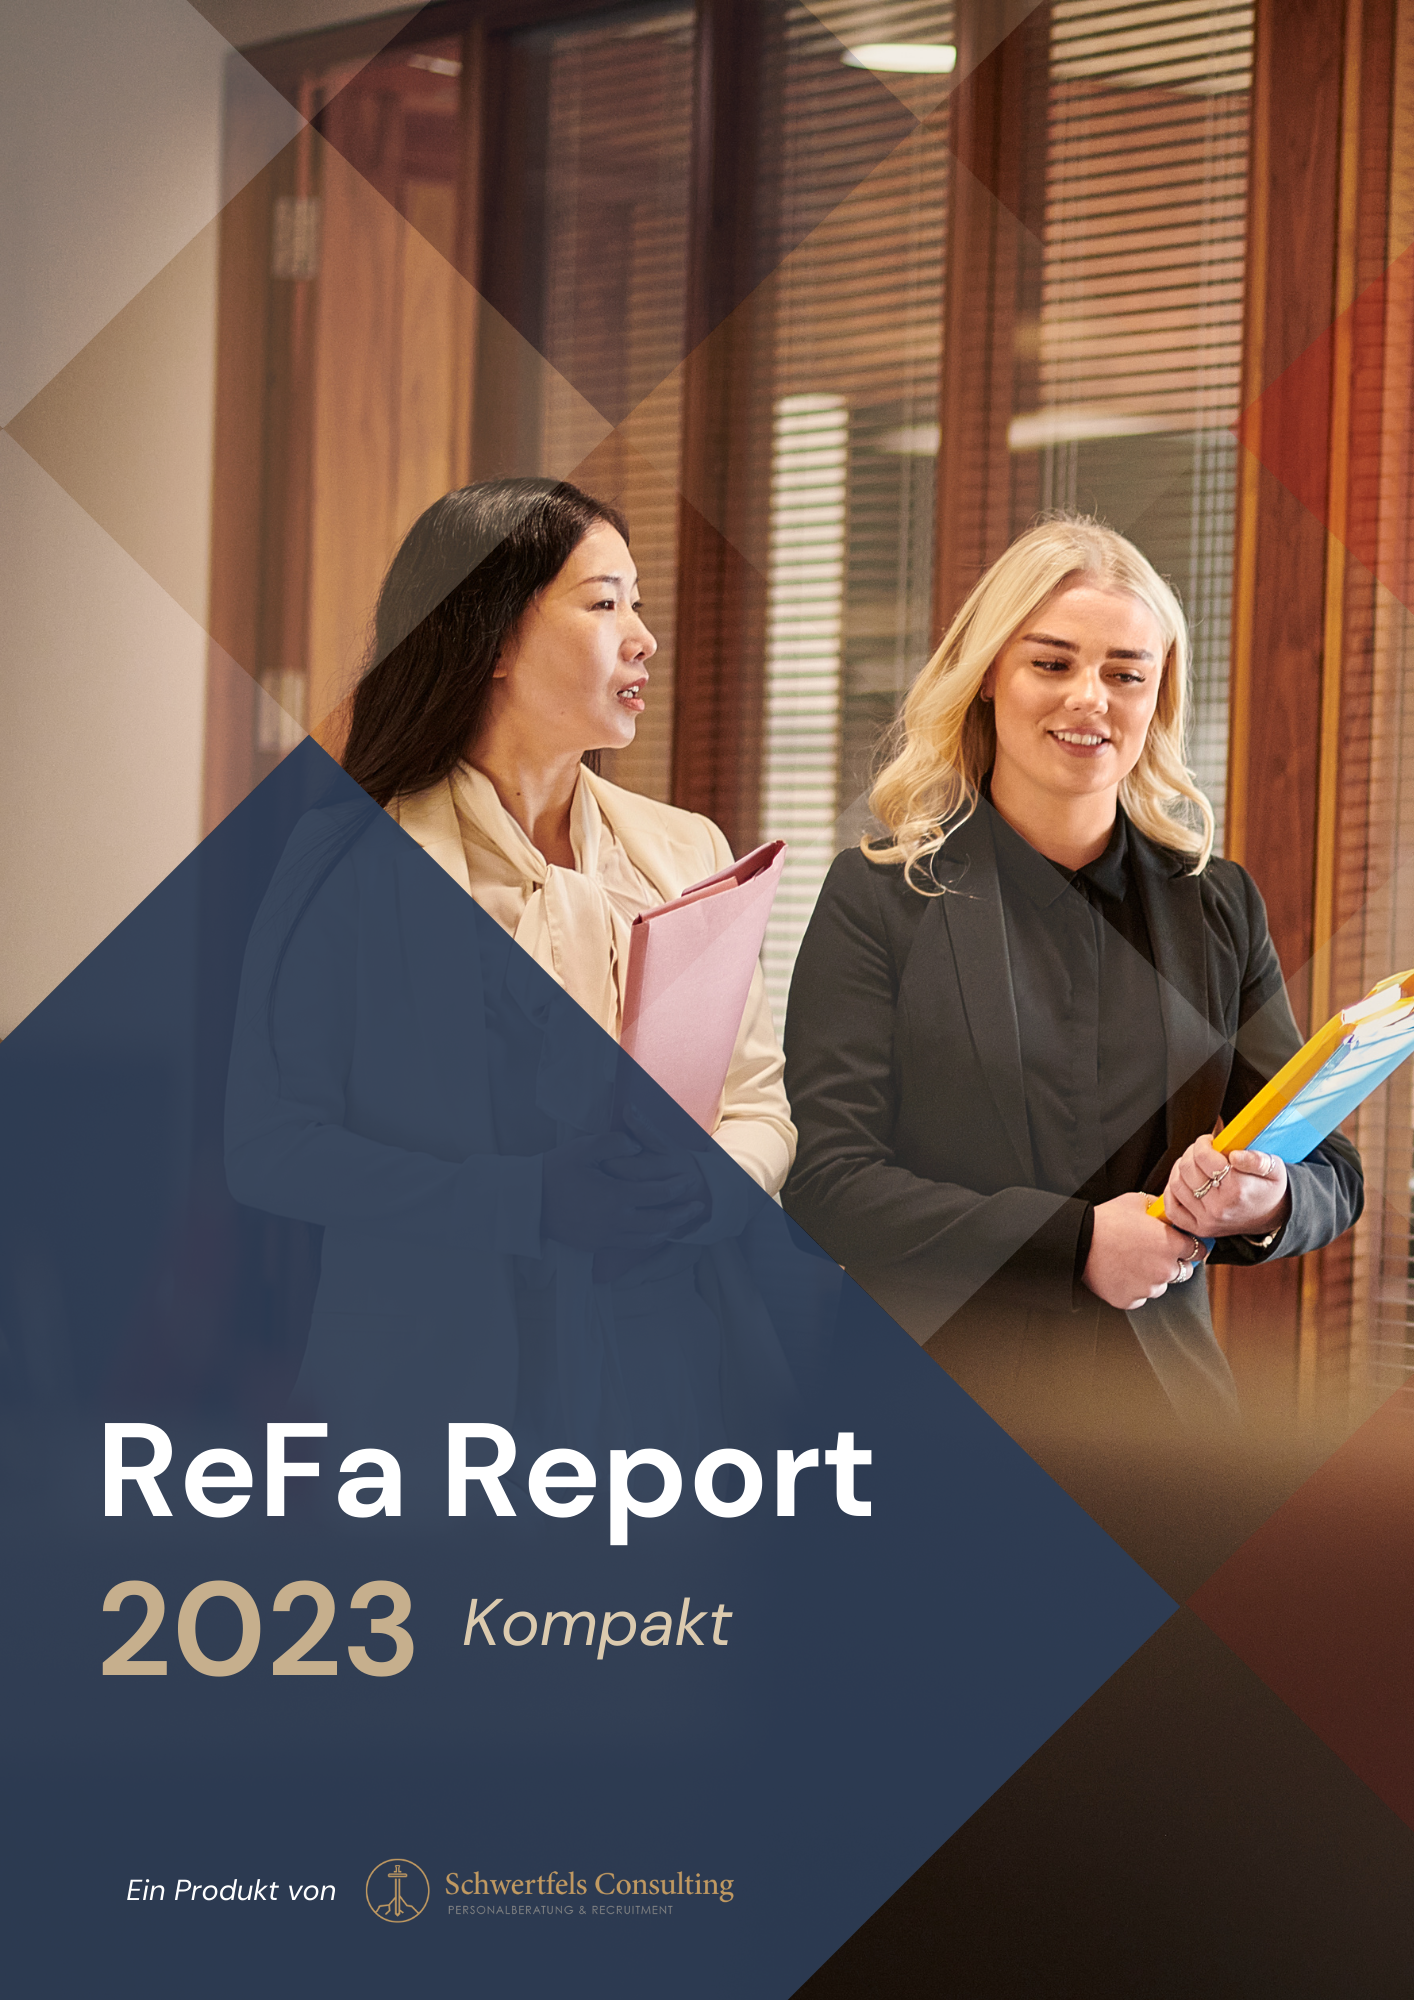 ReFa Report 2023 Kompakt